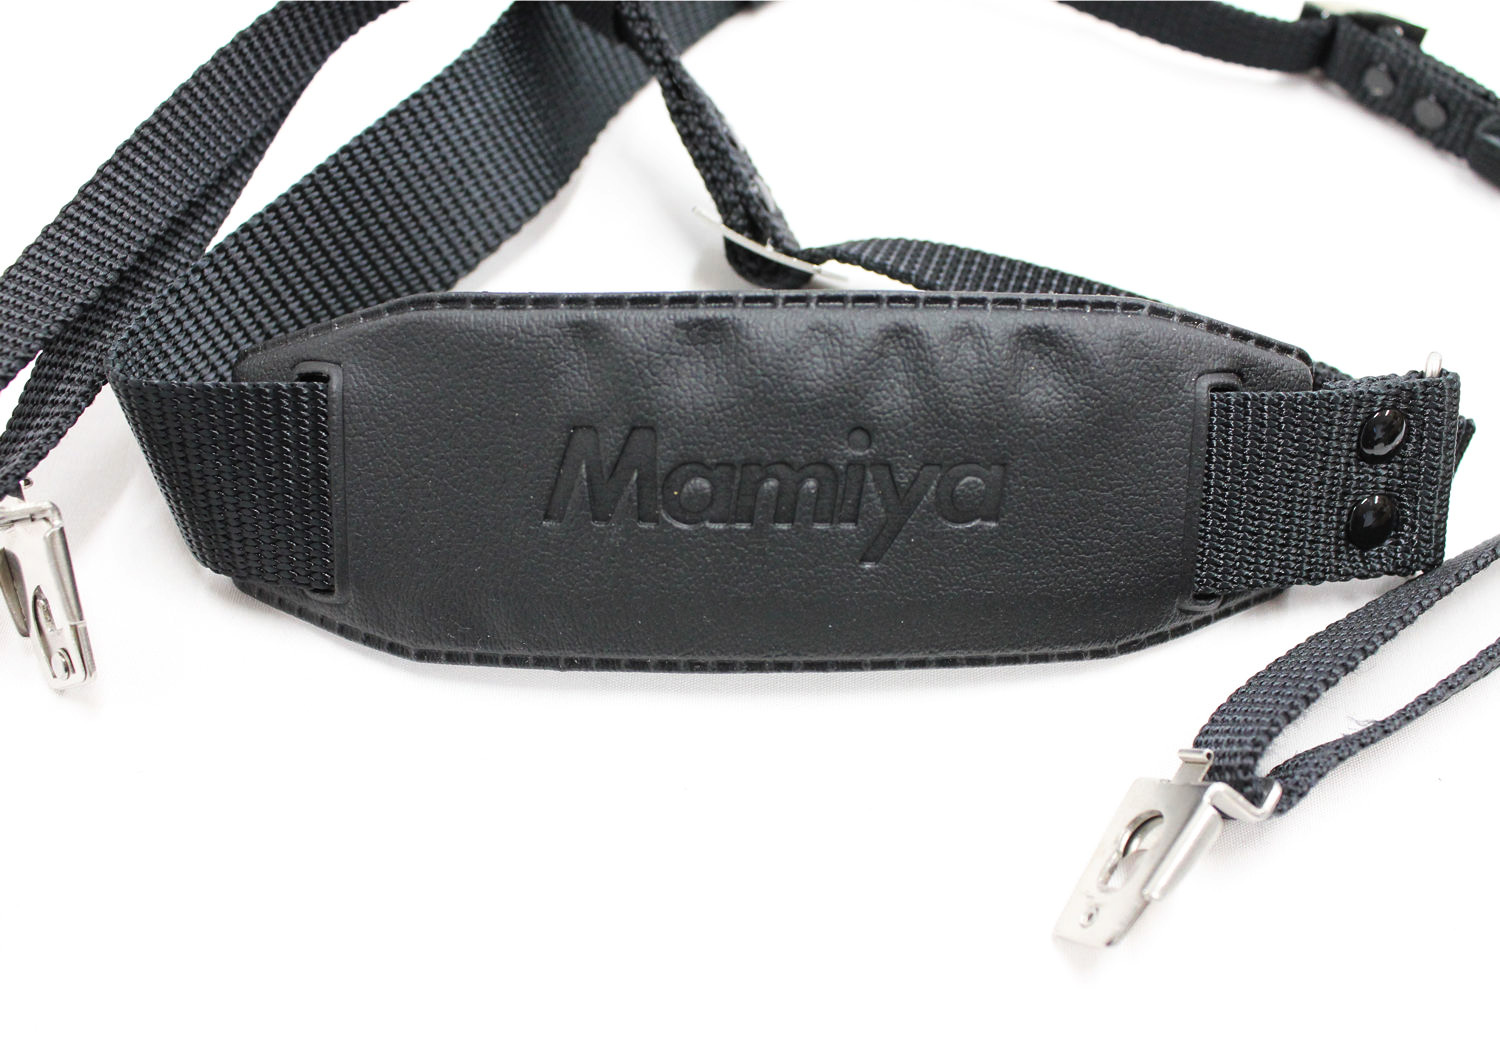 Japan Used Camera Shop | [Mint] Mamiya Neck Strap with Pad for Mamiya for M645 series from Japan